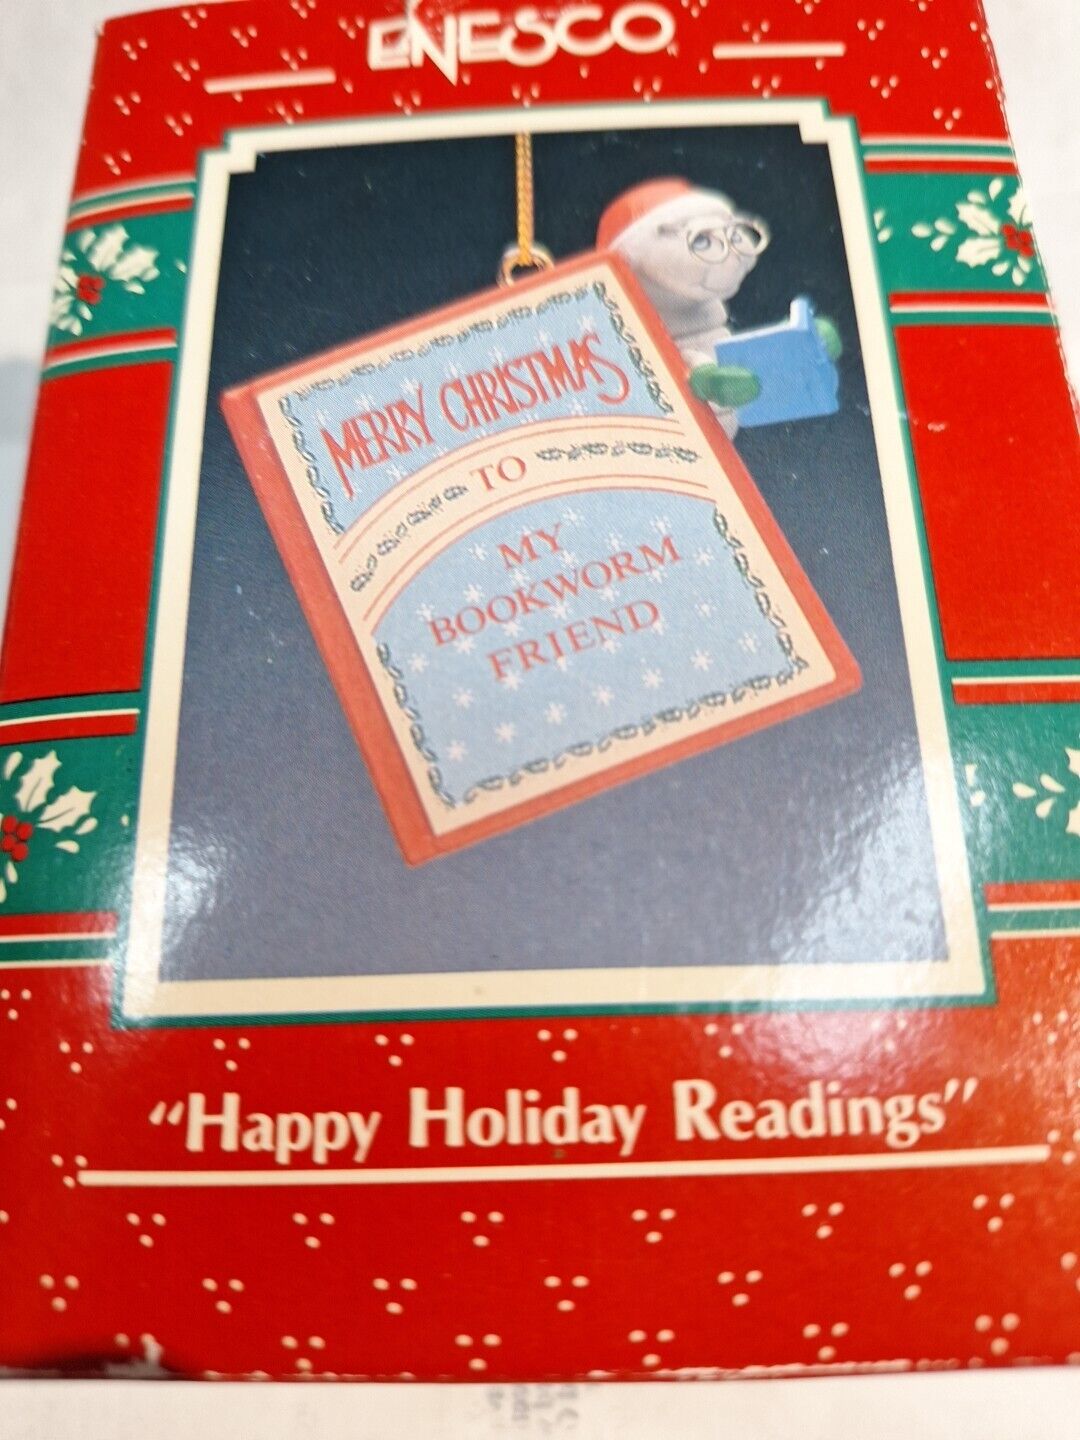 Enesco HAPPY HOLIDAY READINGS Bookworm Friend Christmas Ornament NIB VTG 568104